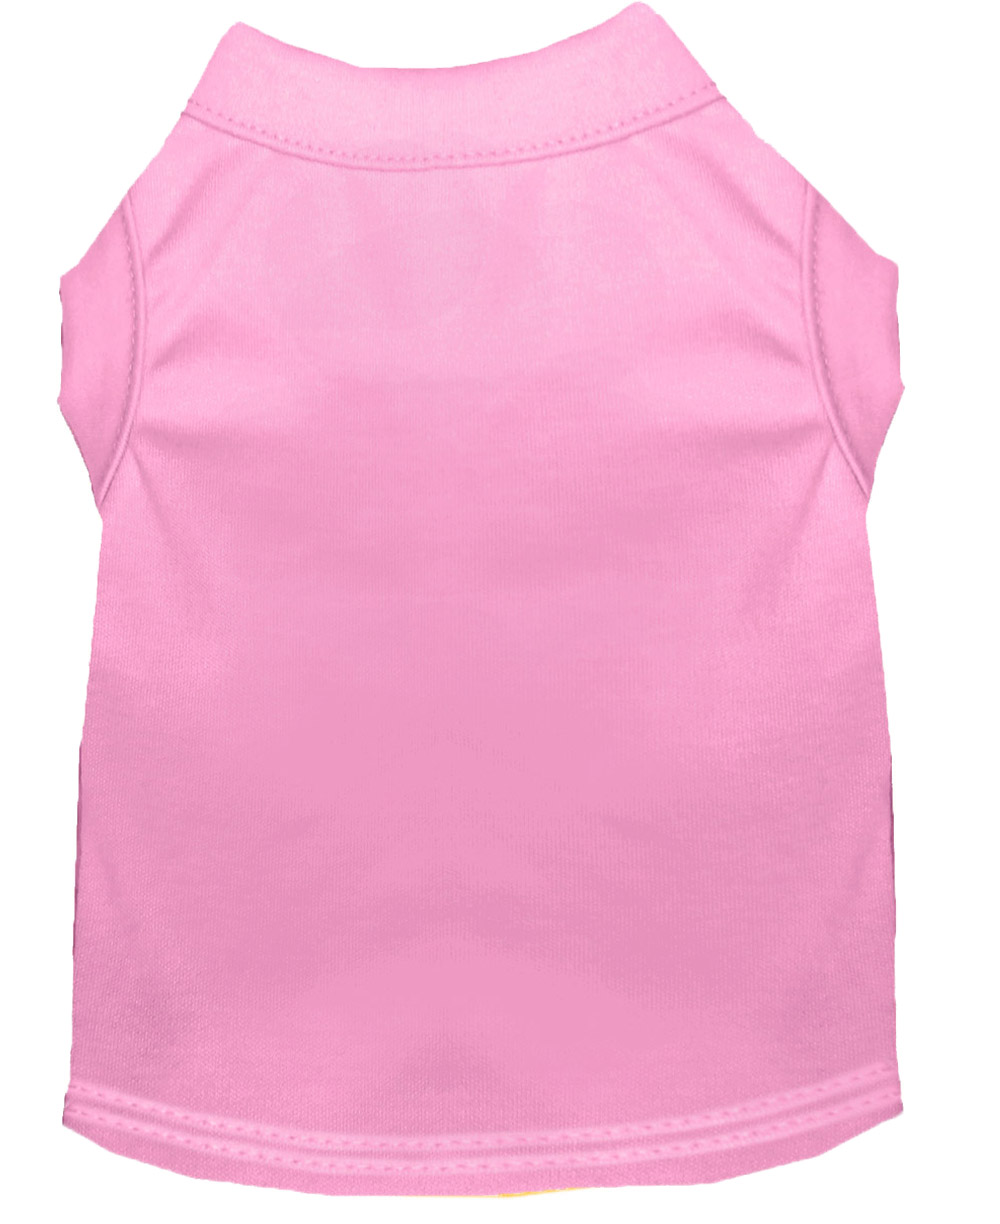 Plain Shirts Light Pink 4X